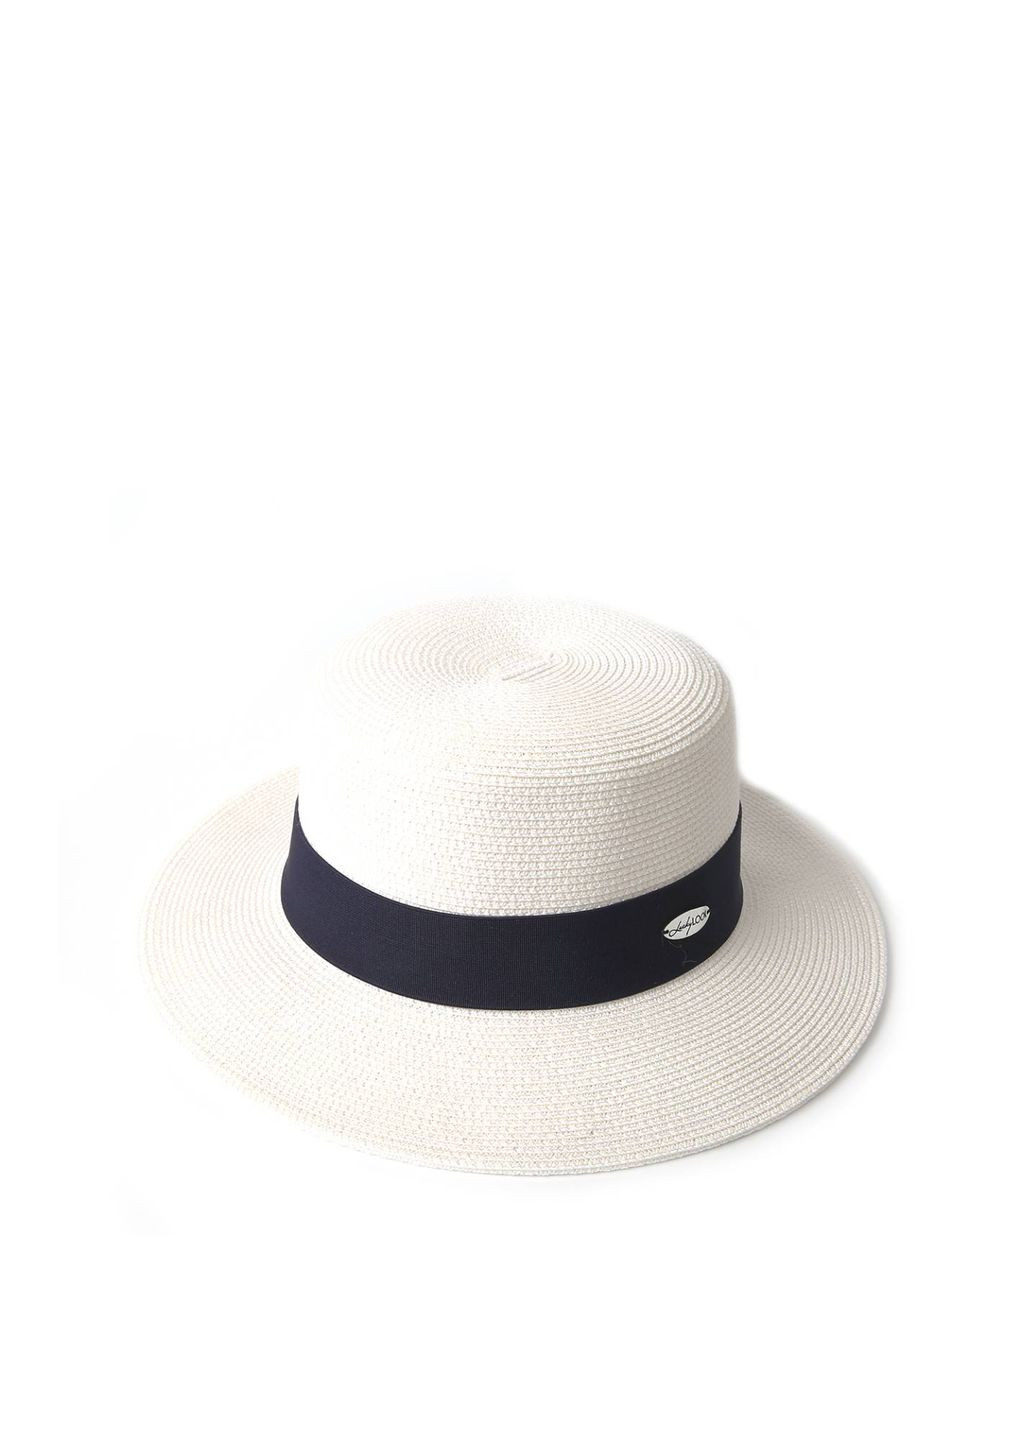 Шляпа канотье женская бумага белая ADELE LuckyLOOK 375-797 (289478353)